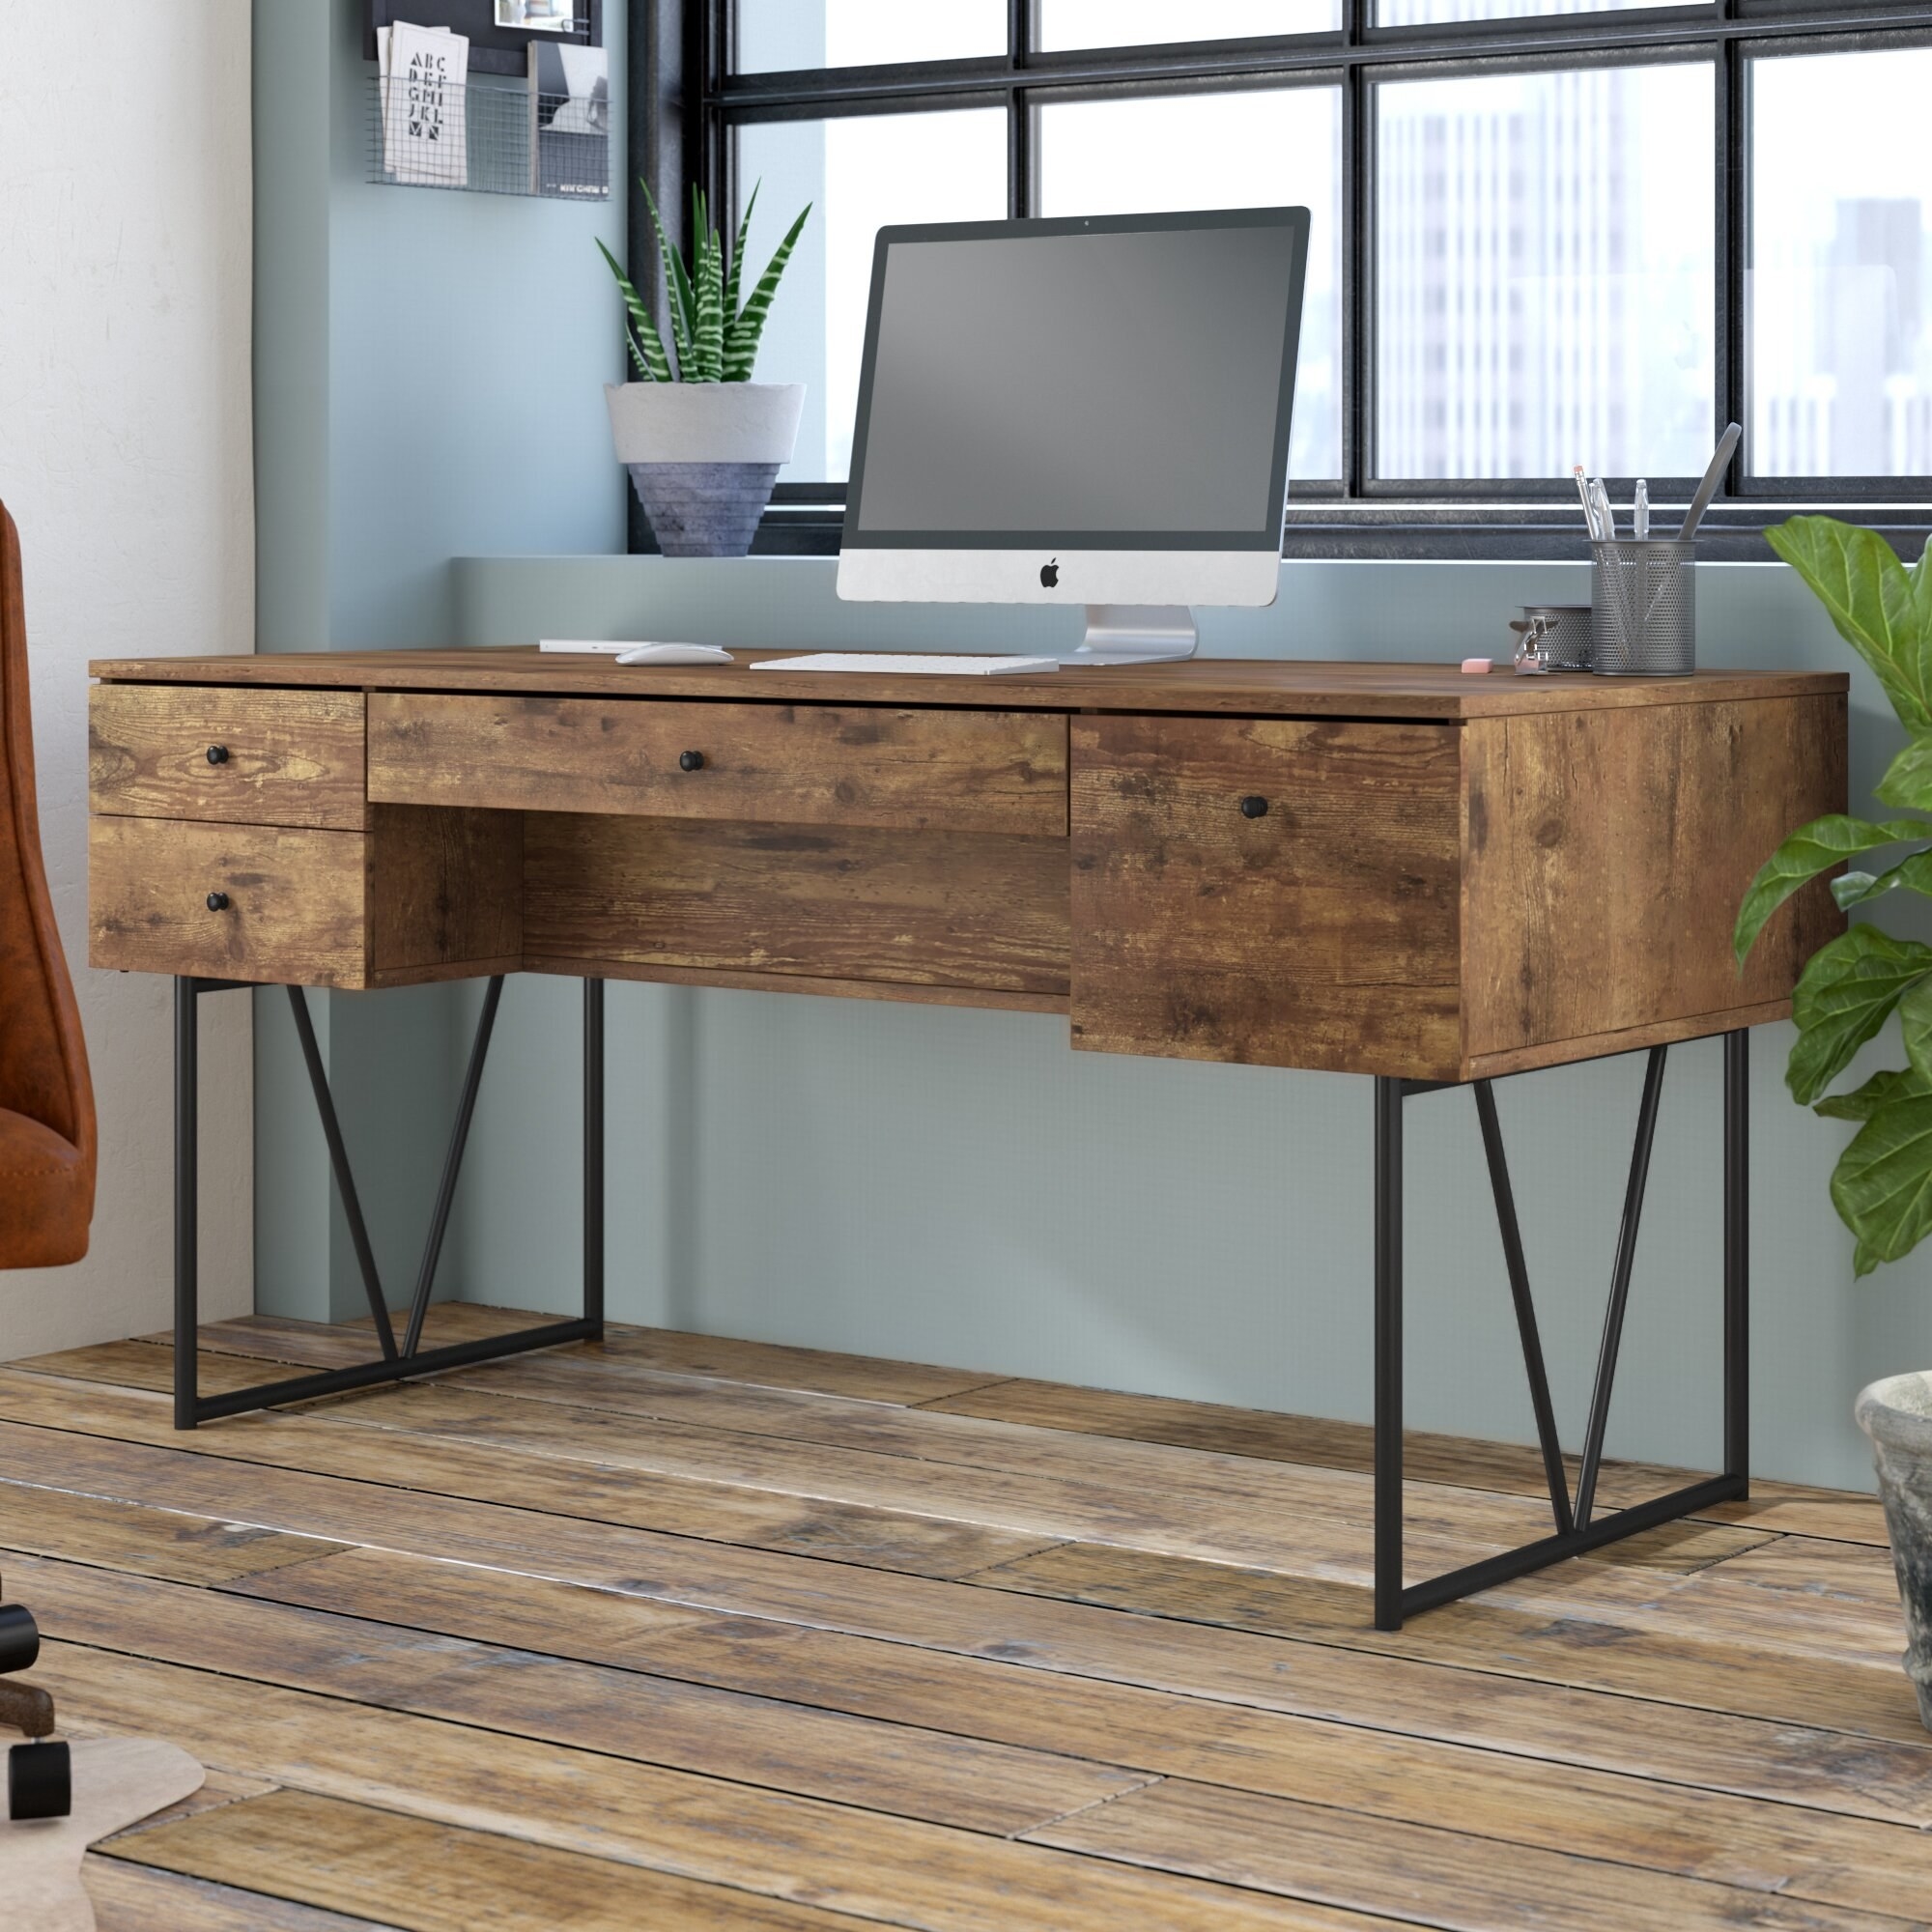 Desk in home office